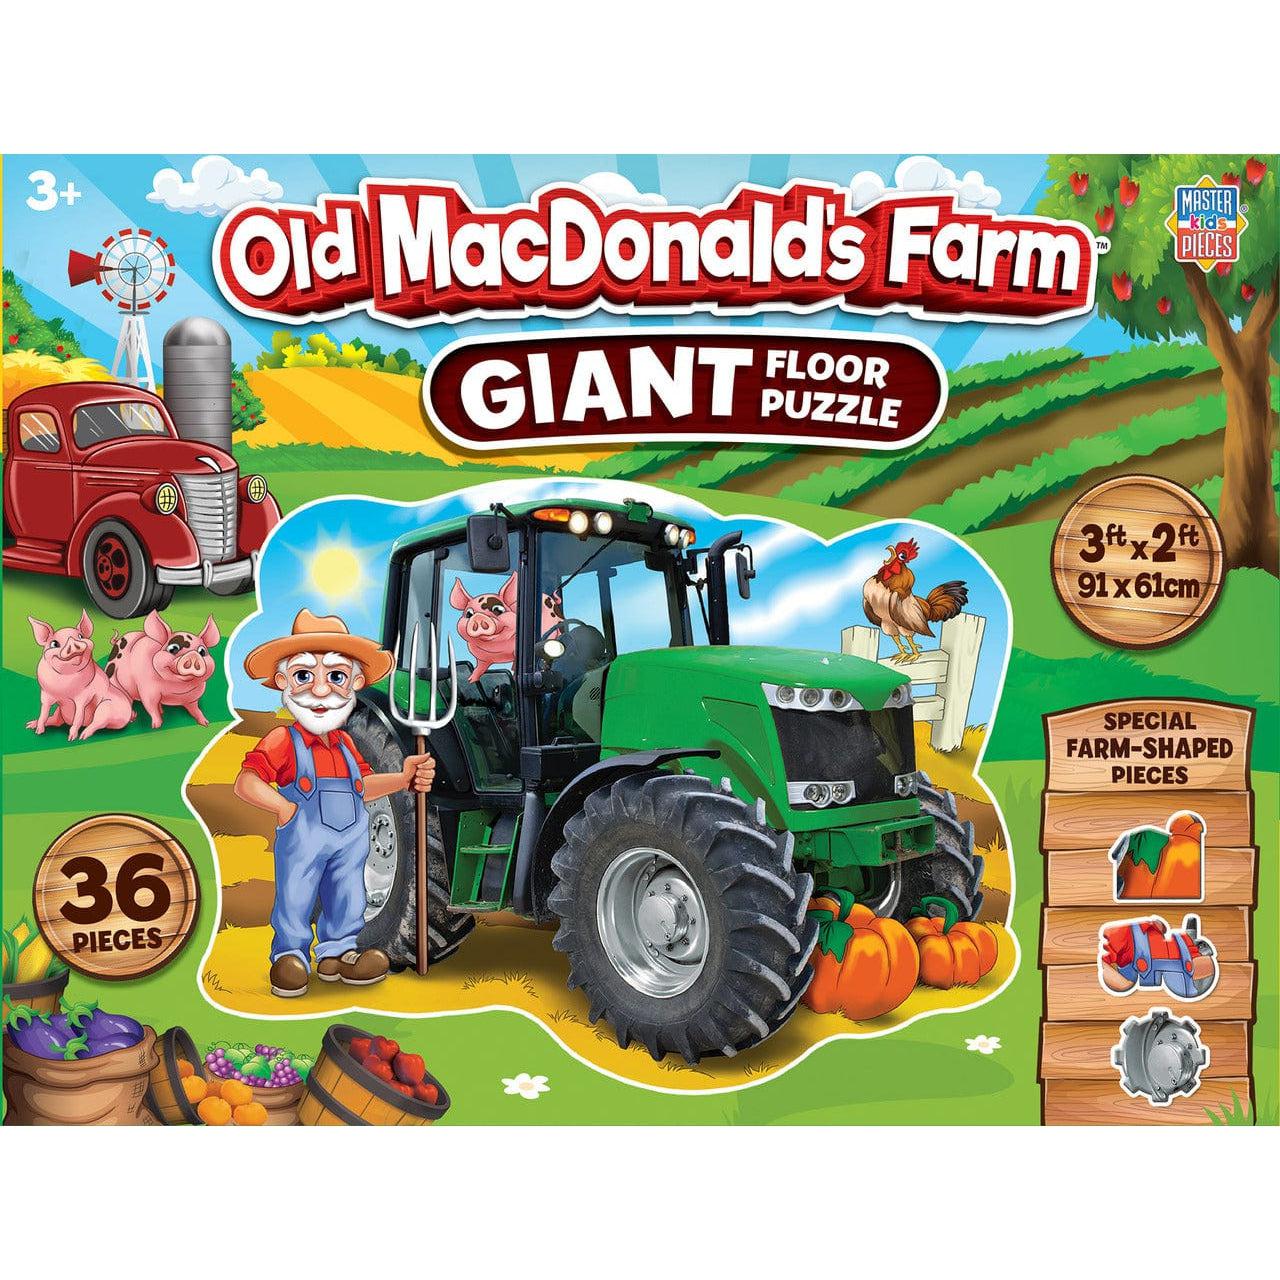 MasterPieces-Old MacDonald's Farm Puzzle - 36pc Floor Puzzle-12978-Legacy Toys